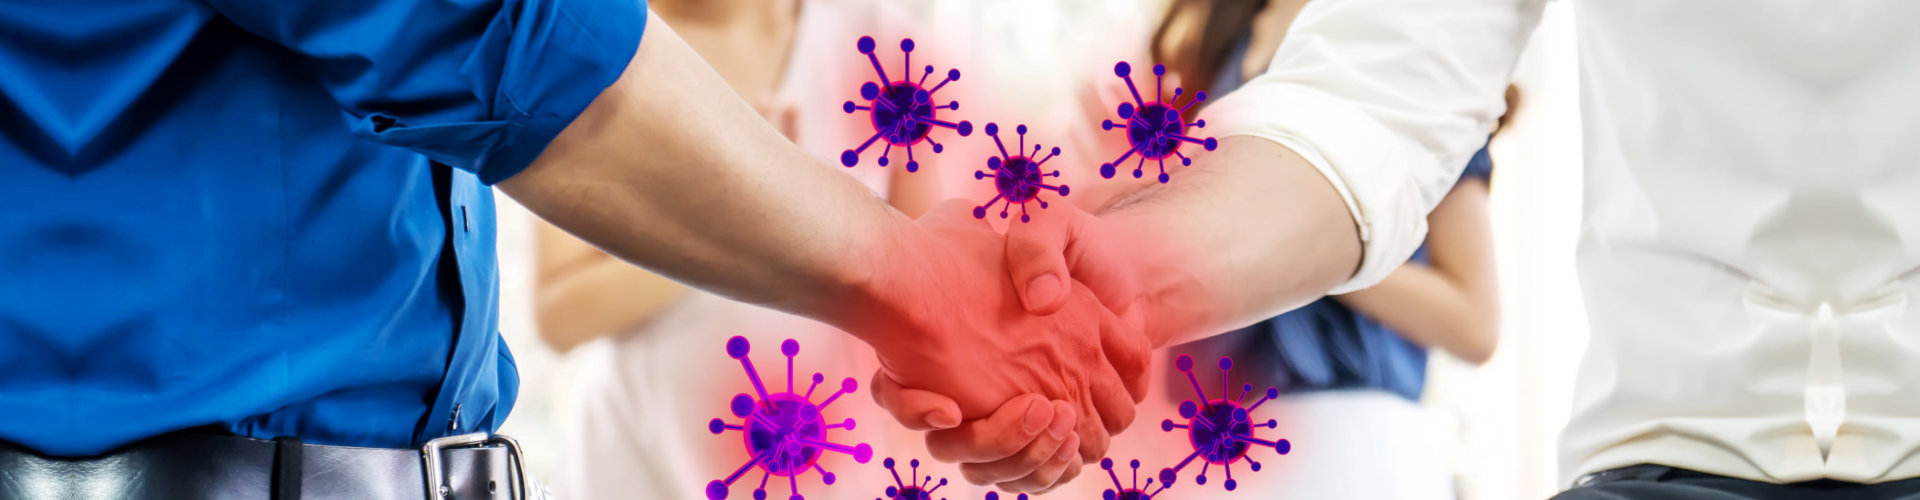 Hand shake warning, Coronavirus or COVID-19 attack concept